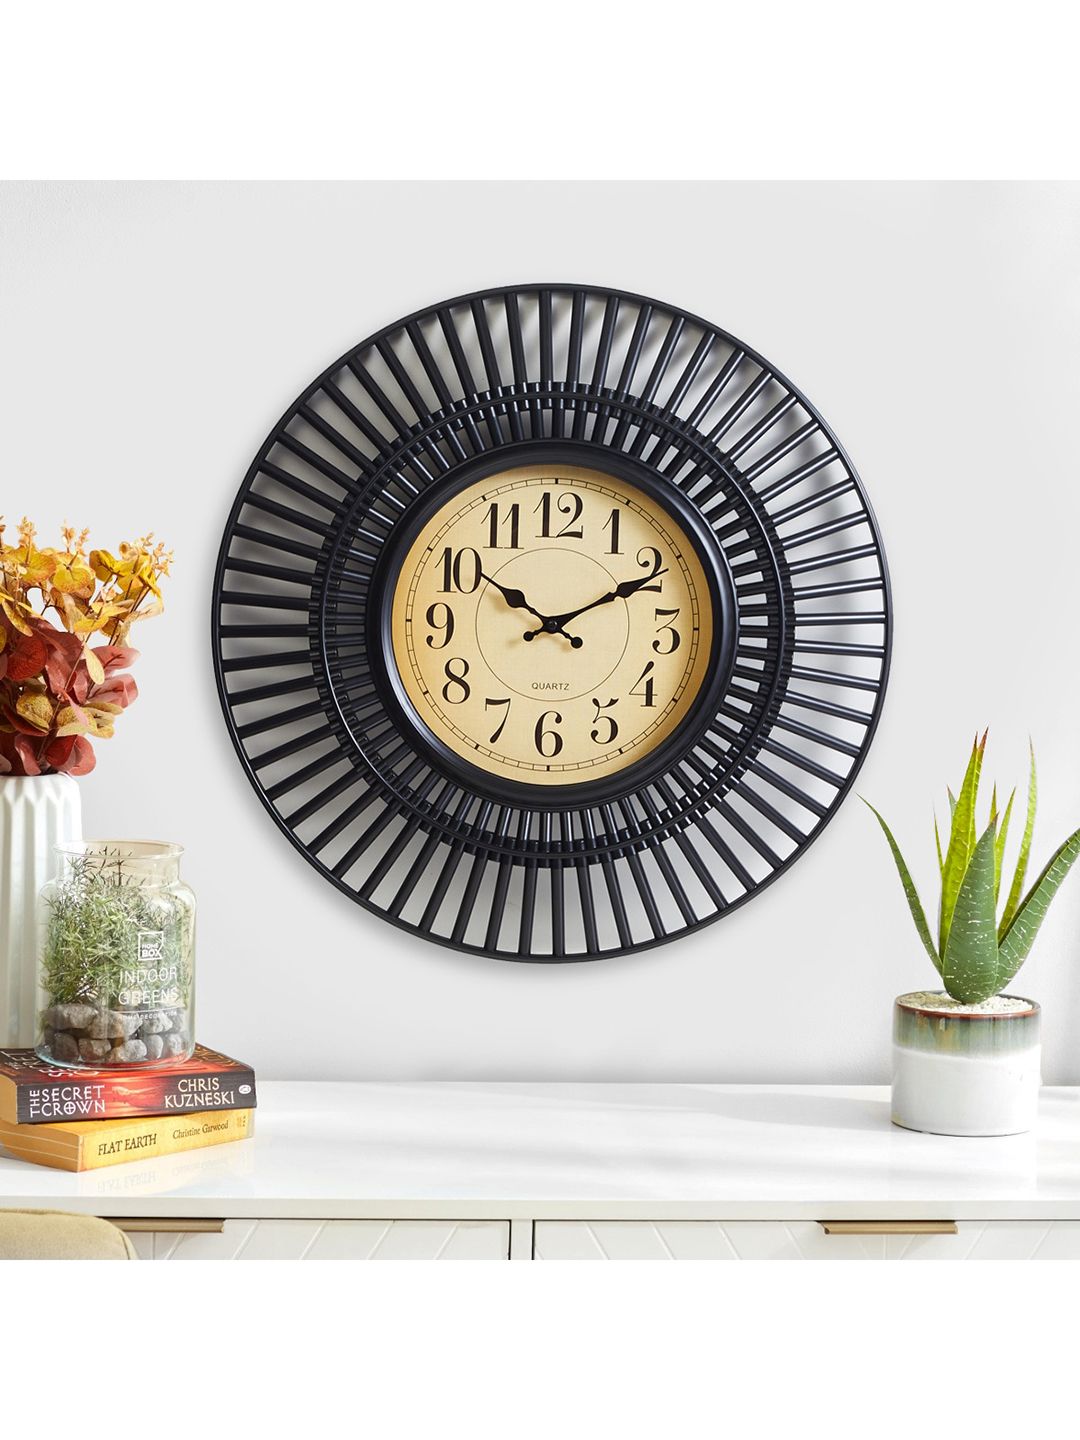 Home Centre Black & Beige Contemporary Wall Clock 1000011309389 Price in India